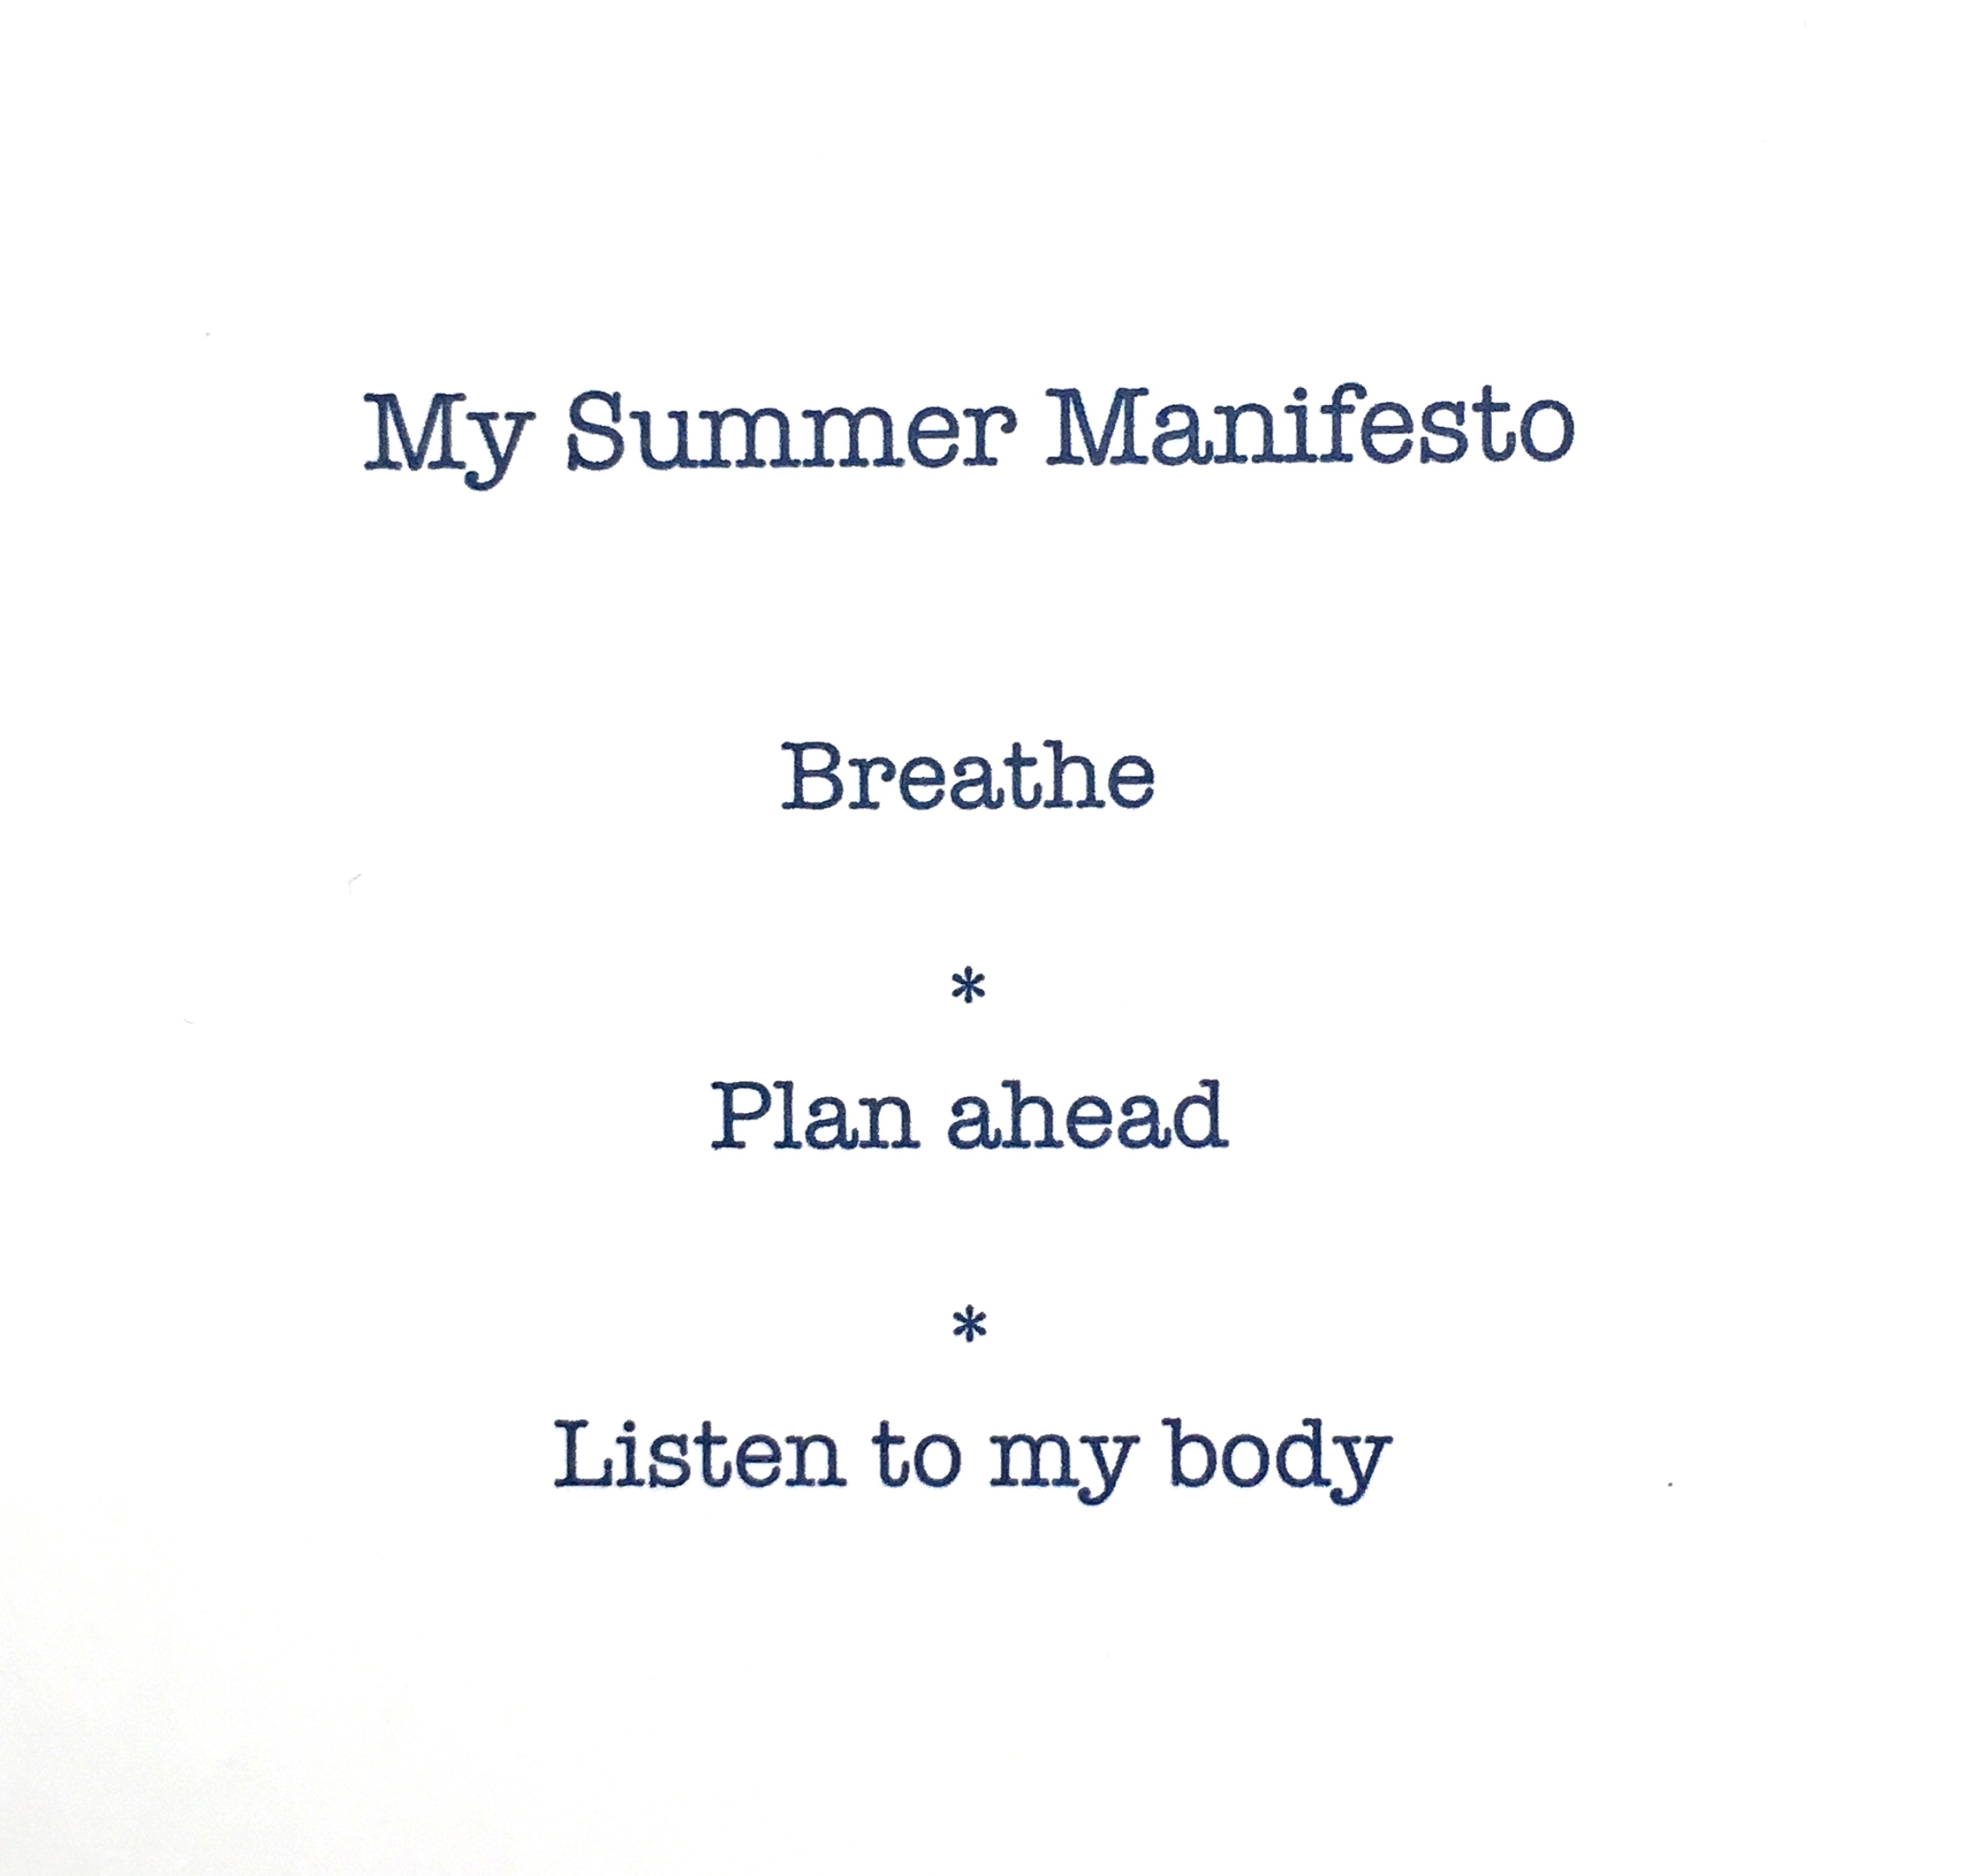 Summer Manifesto